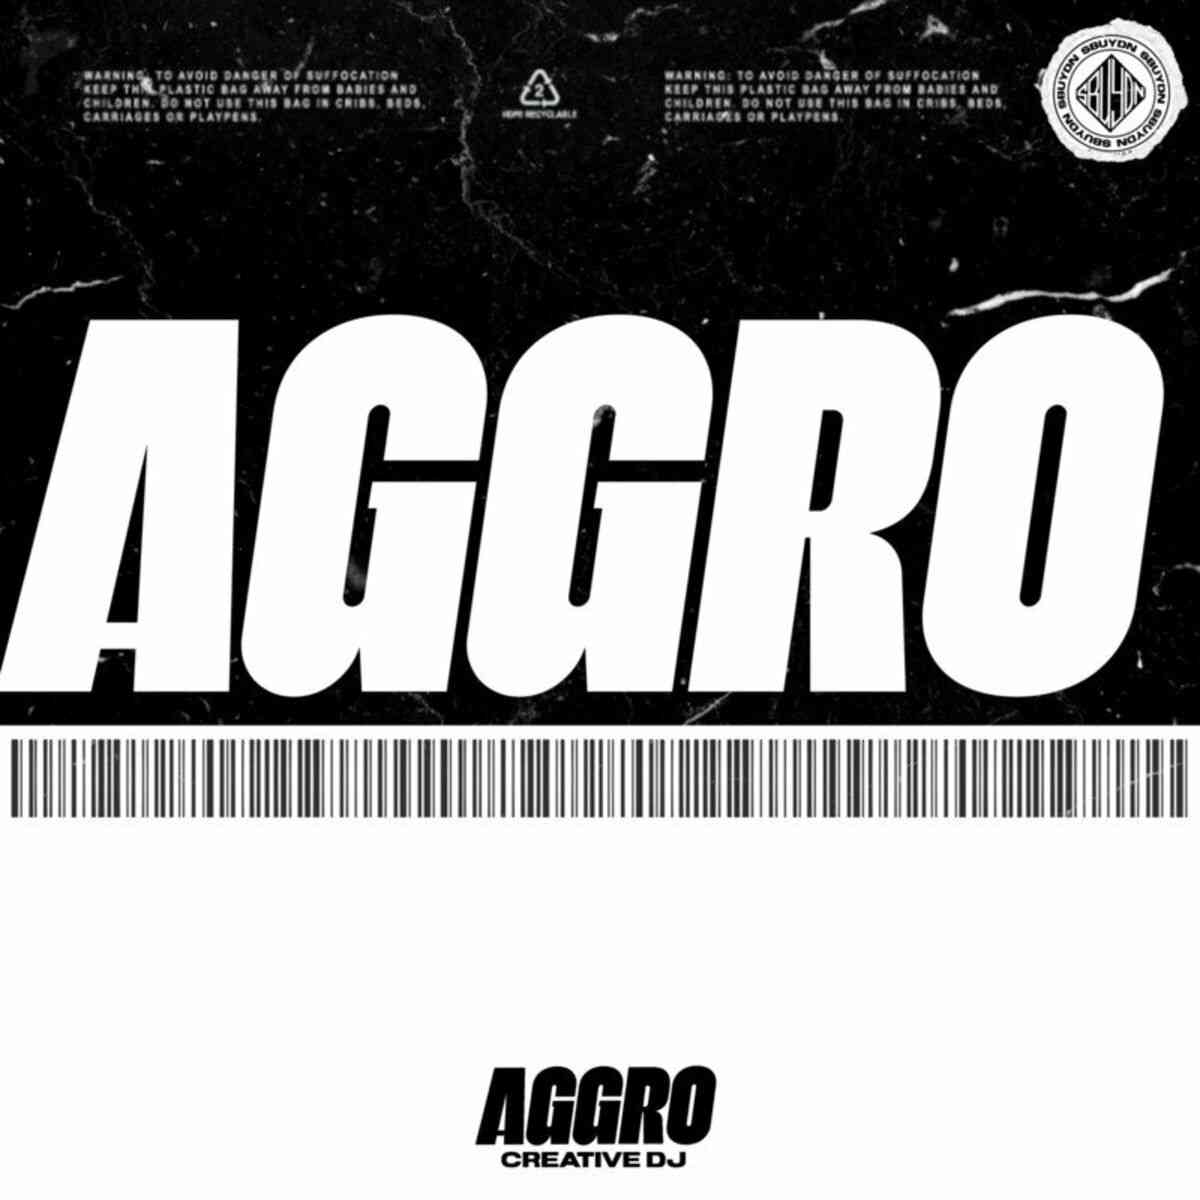 Creative DJ AGGRO EP